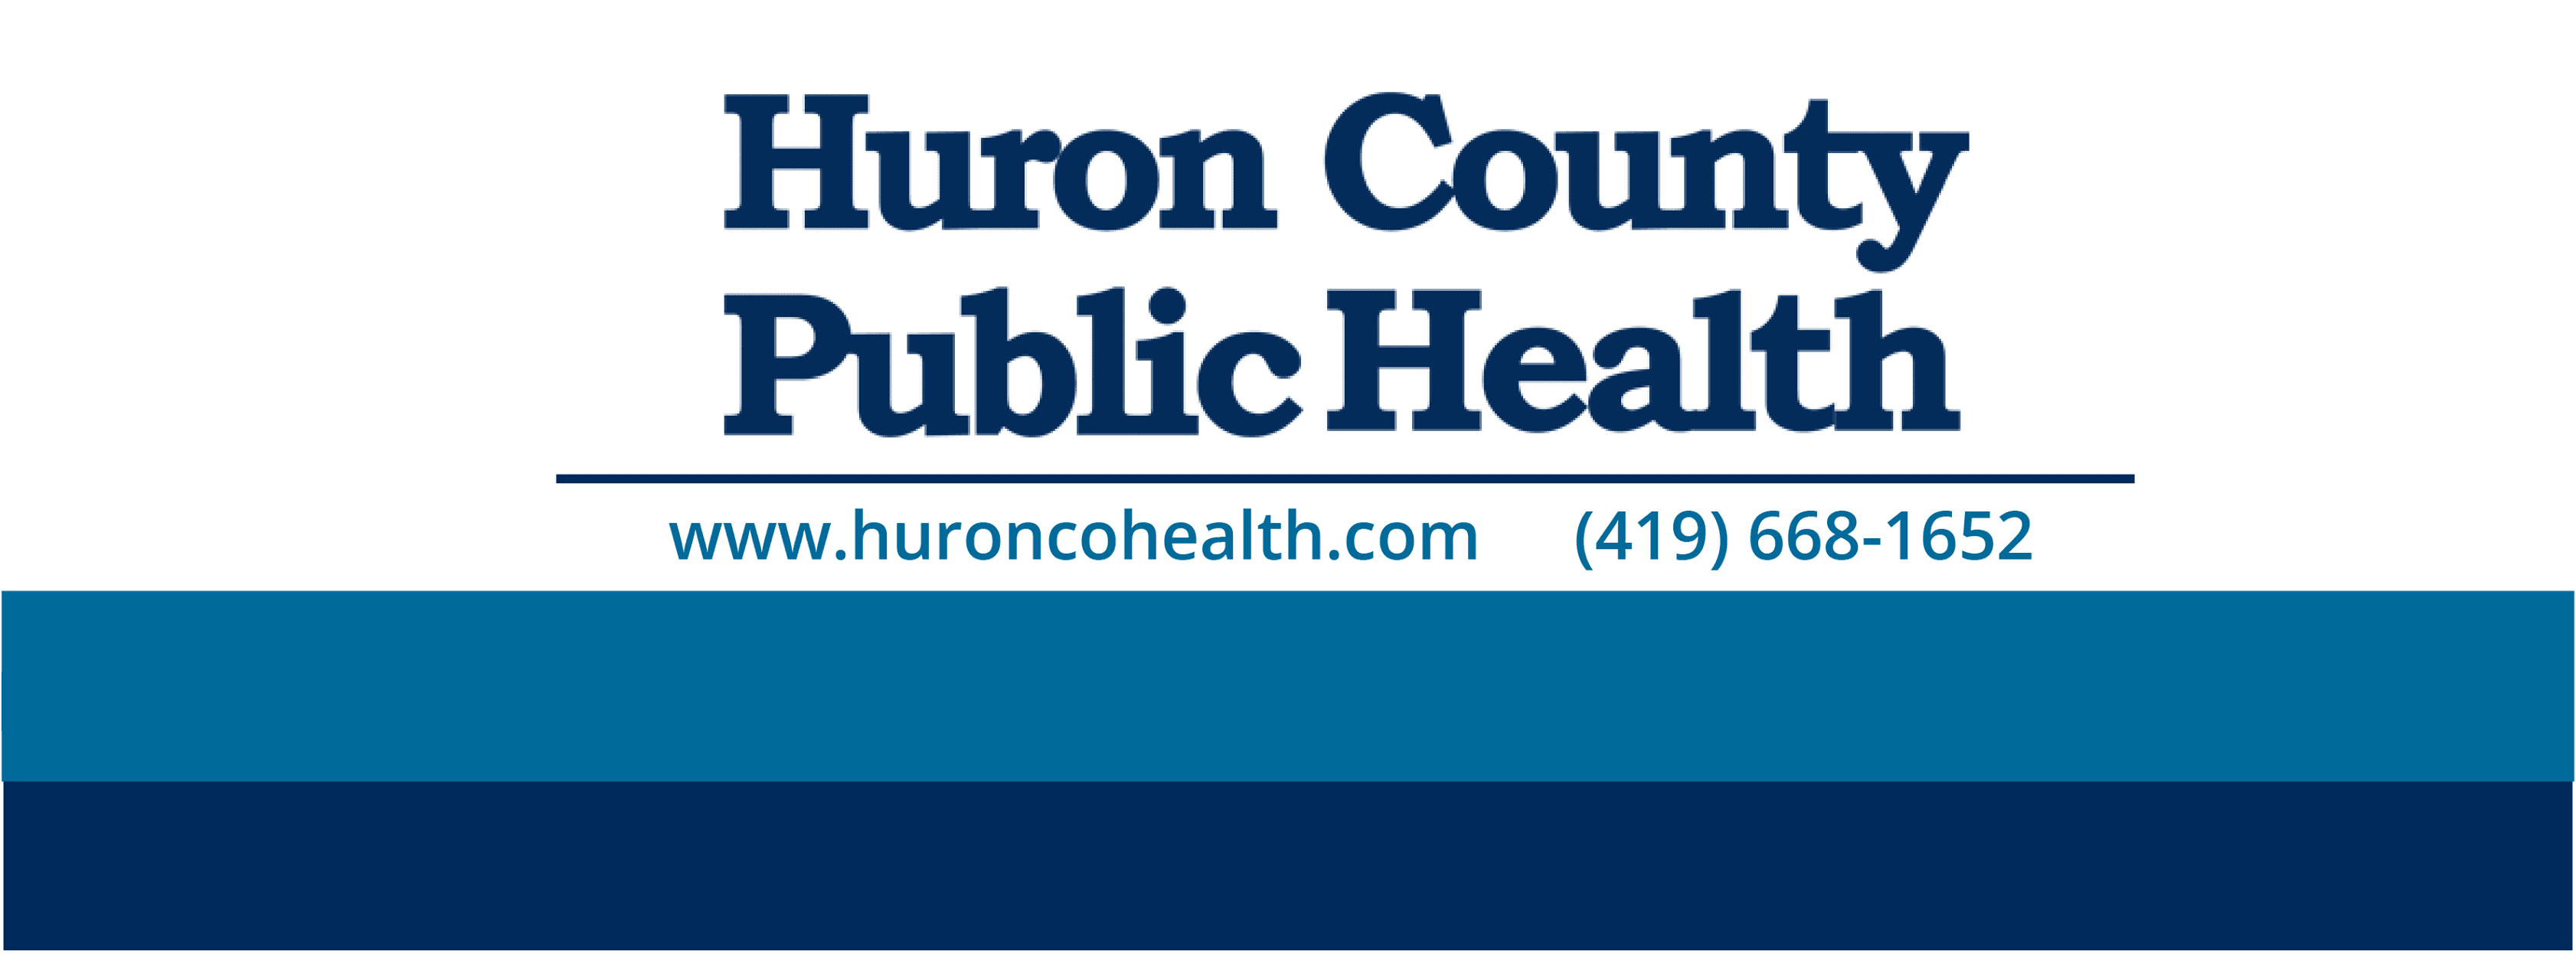 Huron County Public Health Department